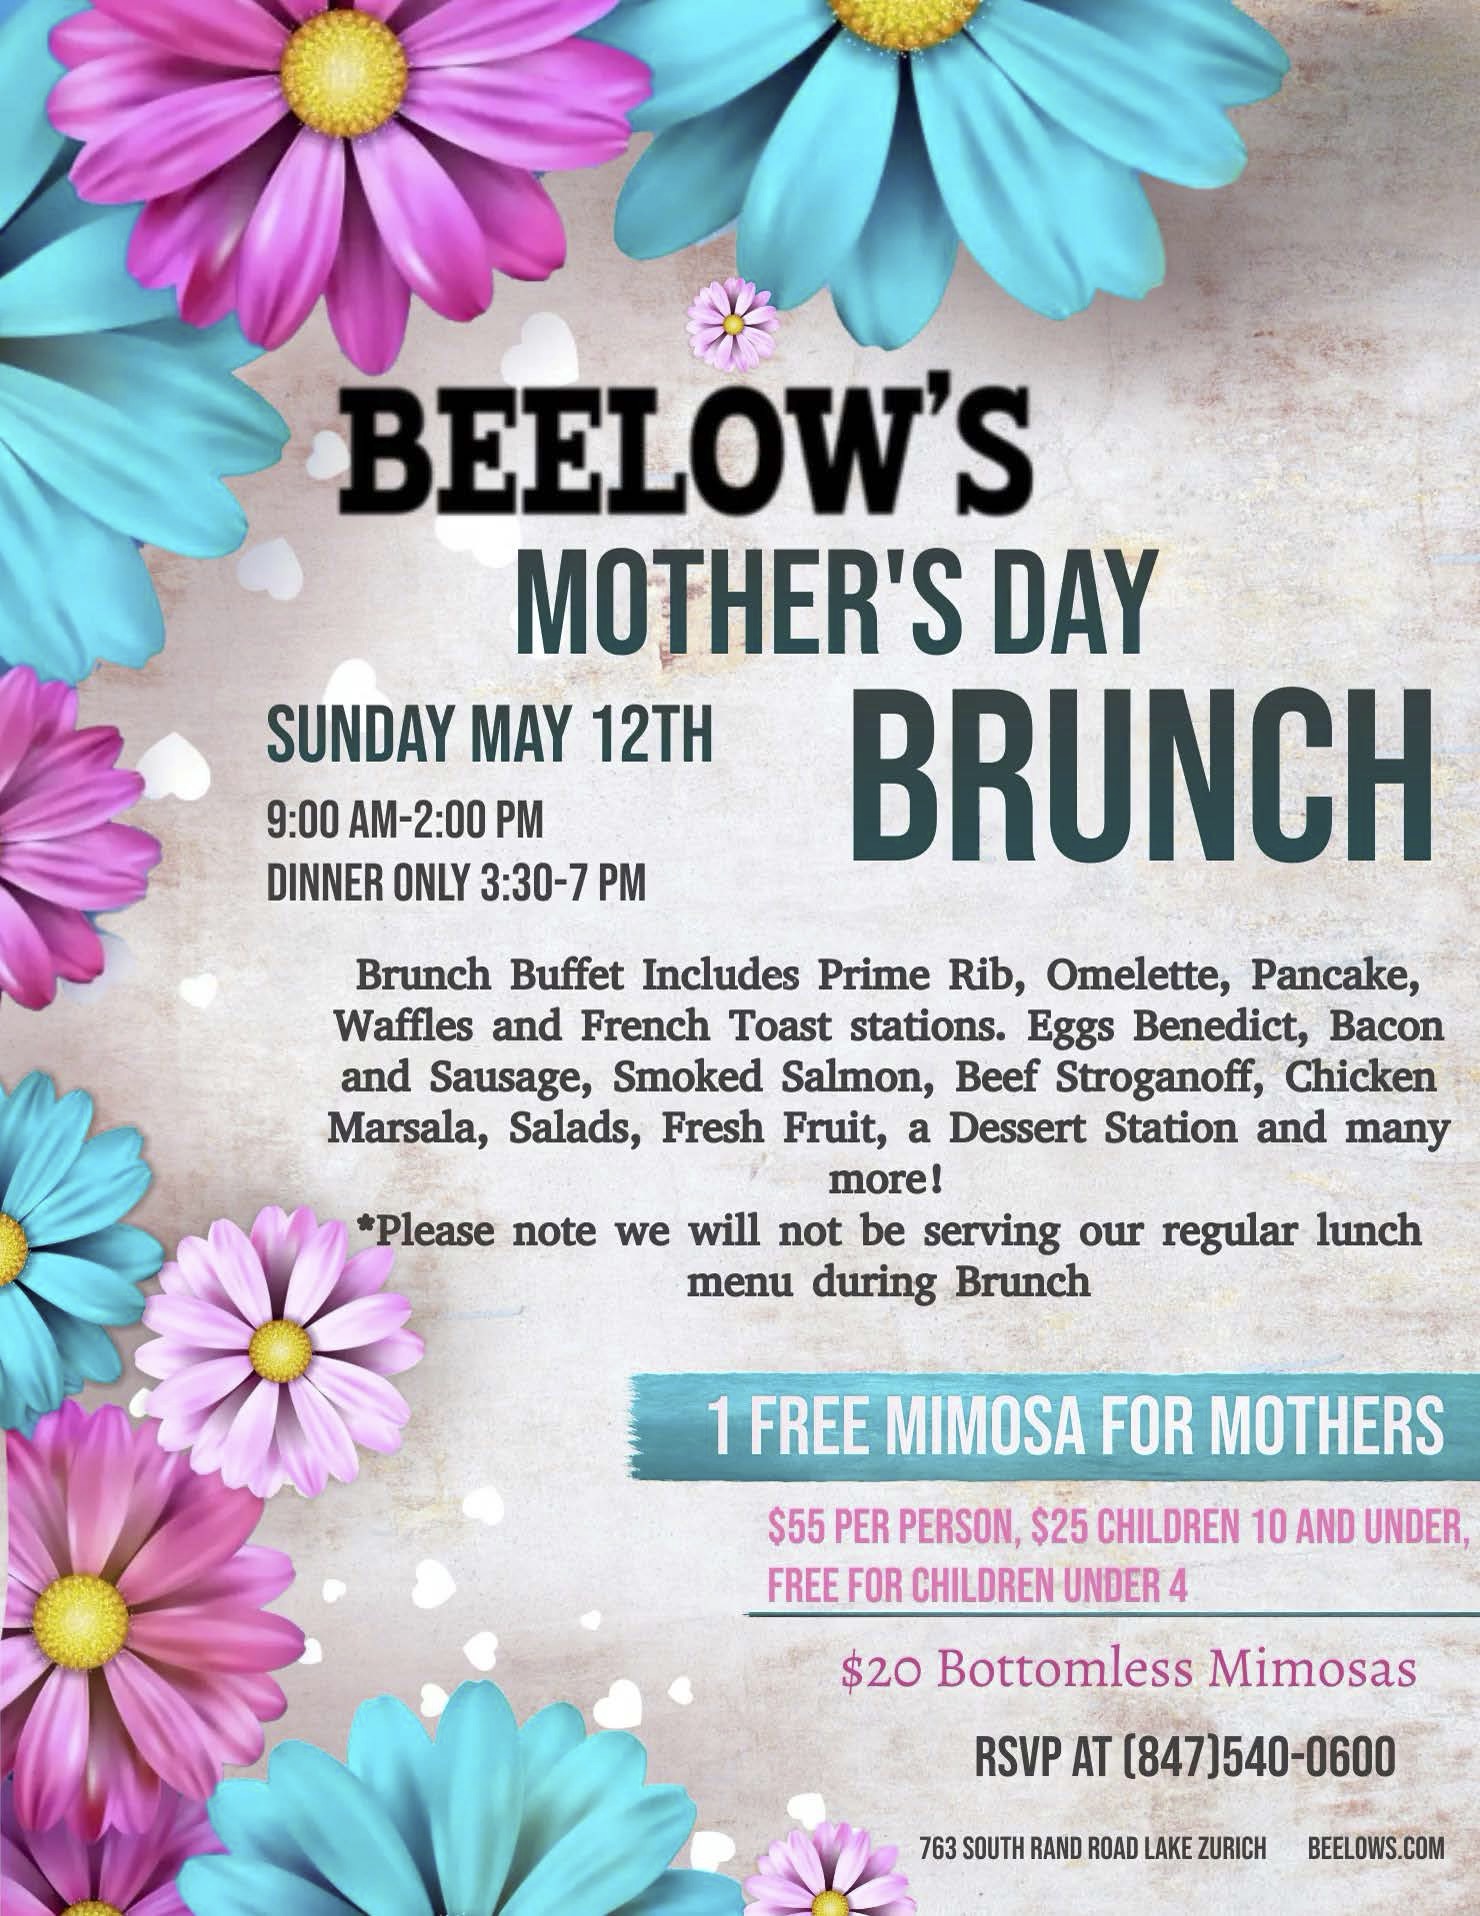 Beelow's Mother's Day Brunch